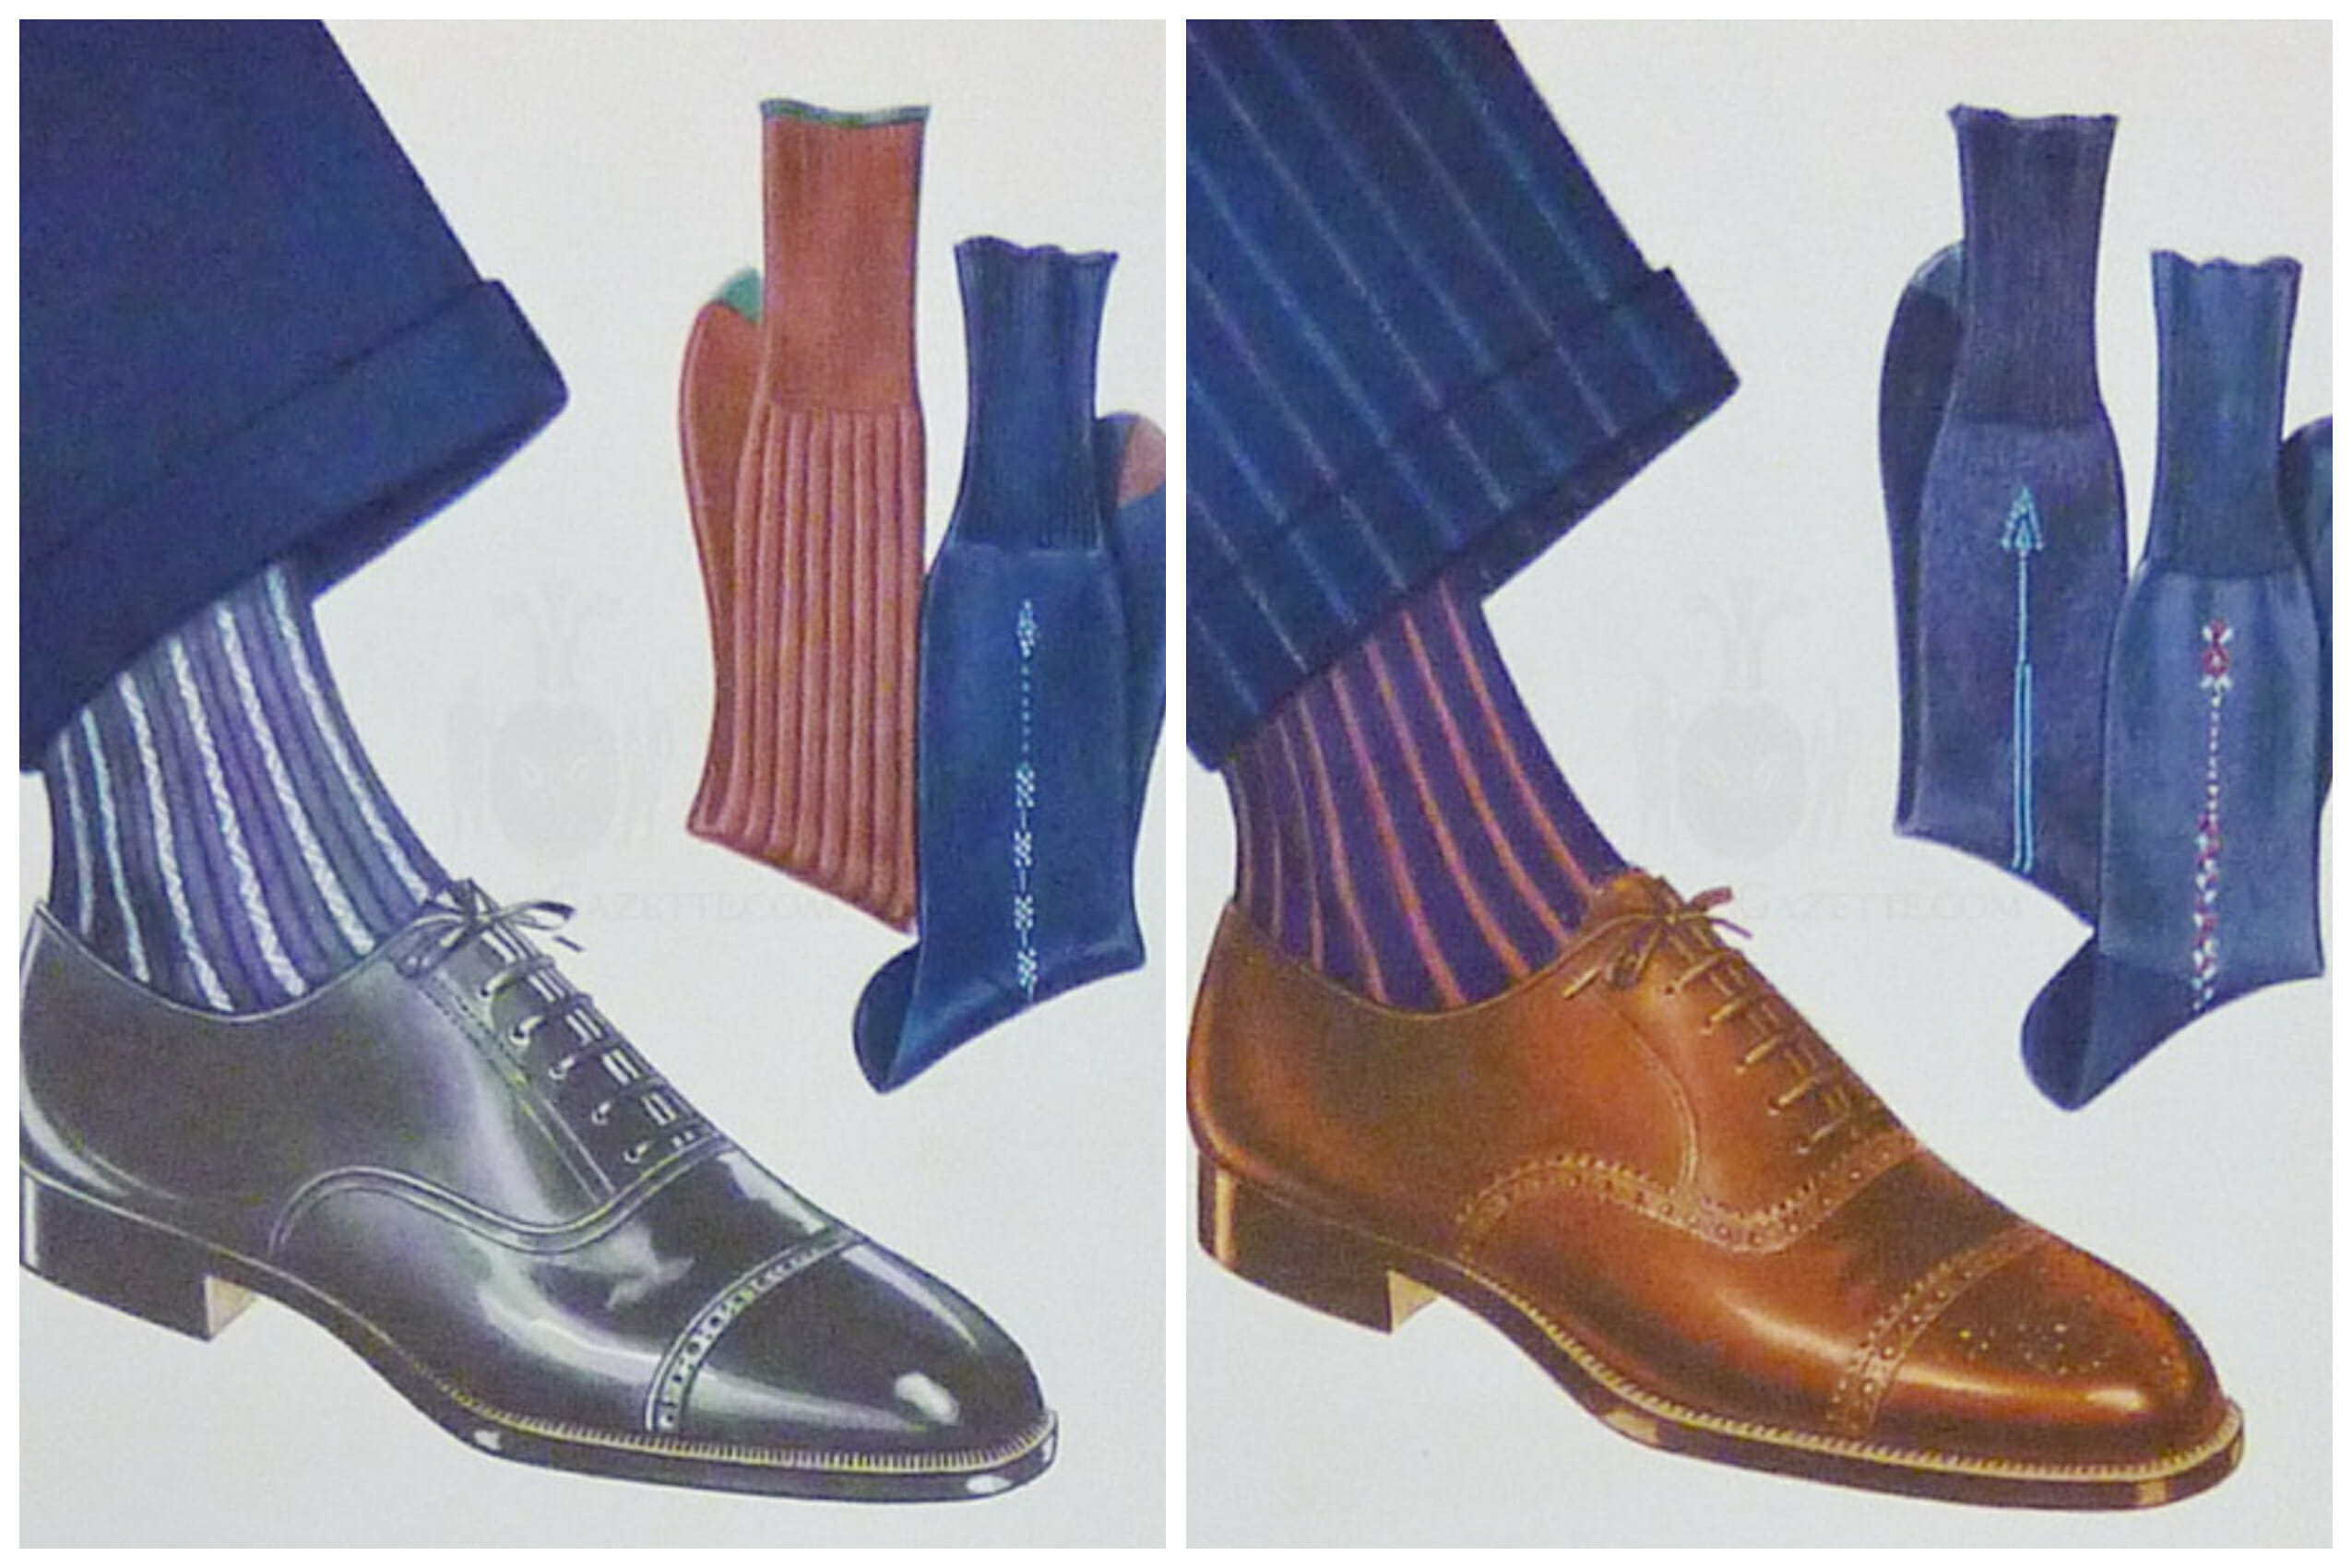 Illustrations of classic dress socks